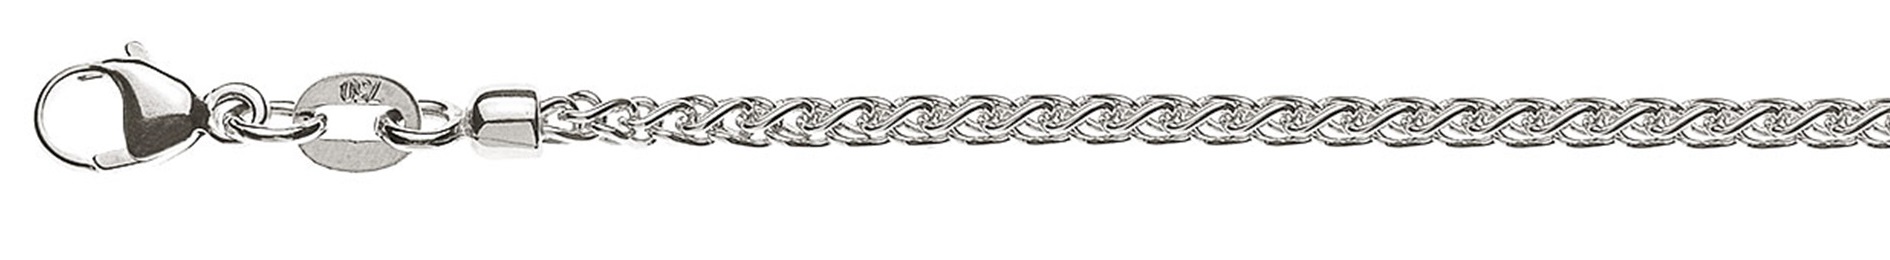 AURONOS Prestige Collier or blanc 18K chaîne câble 40cm 2.15mm